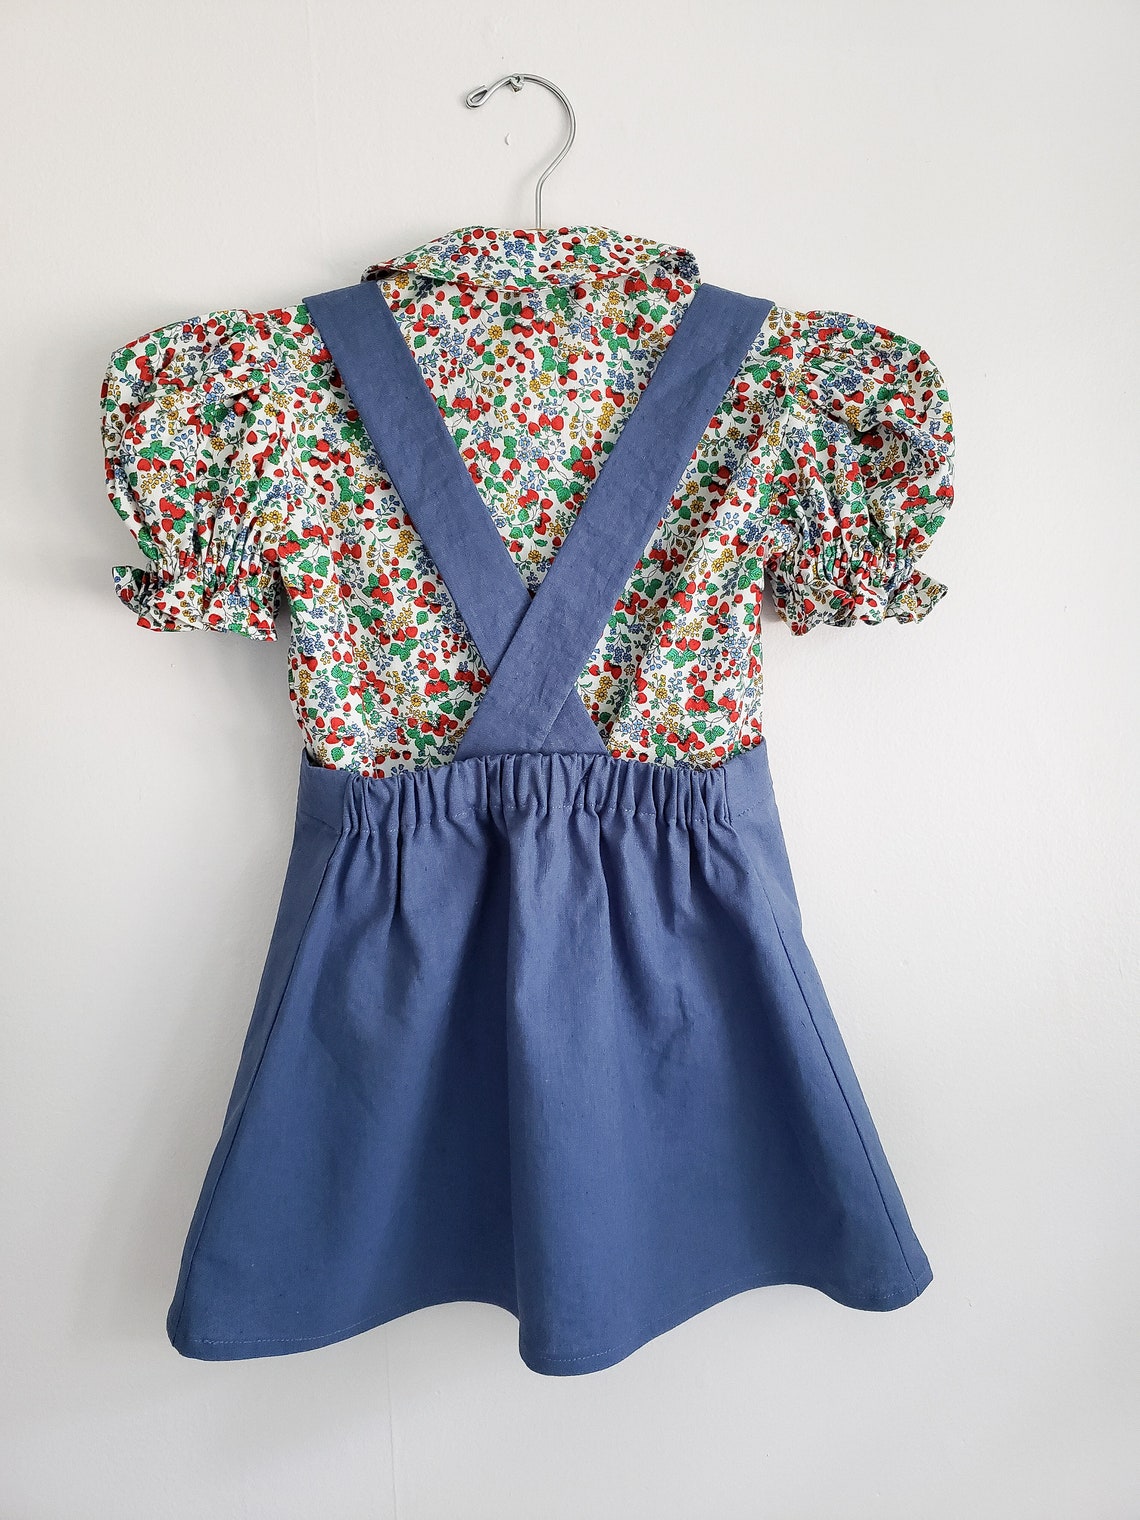 Girls Linen Skirt With Suspenders Toddler Skirt With | Etsy